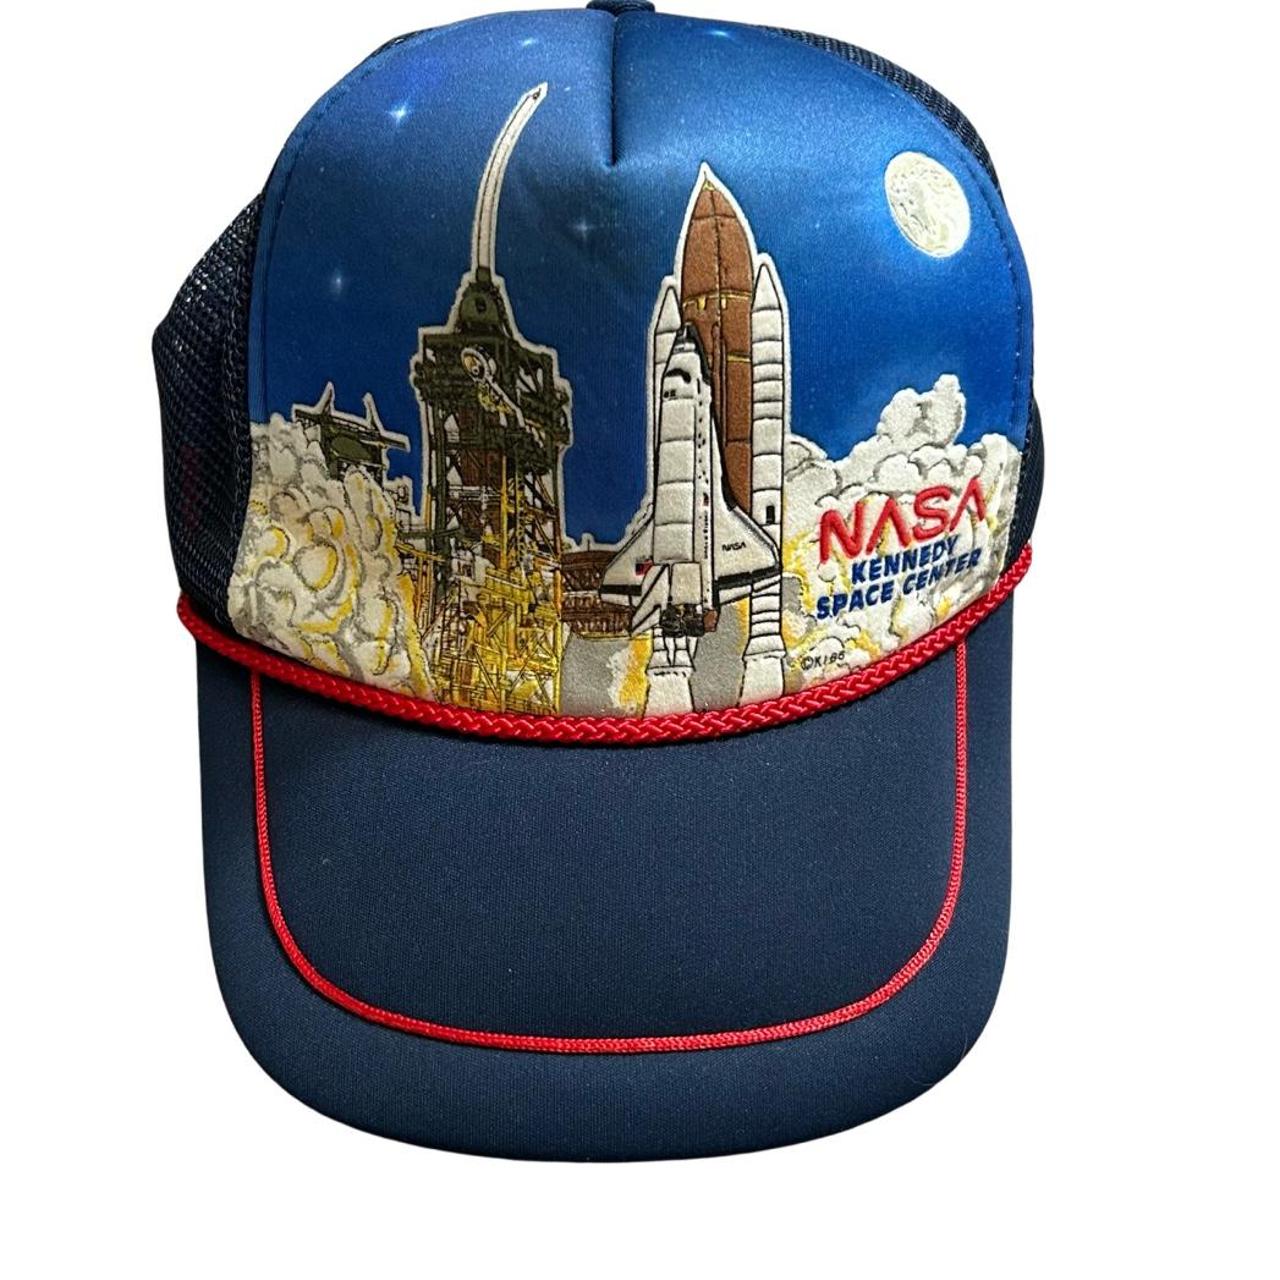 Nasa Kennedy Space Center Hat